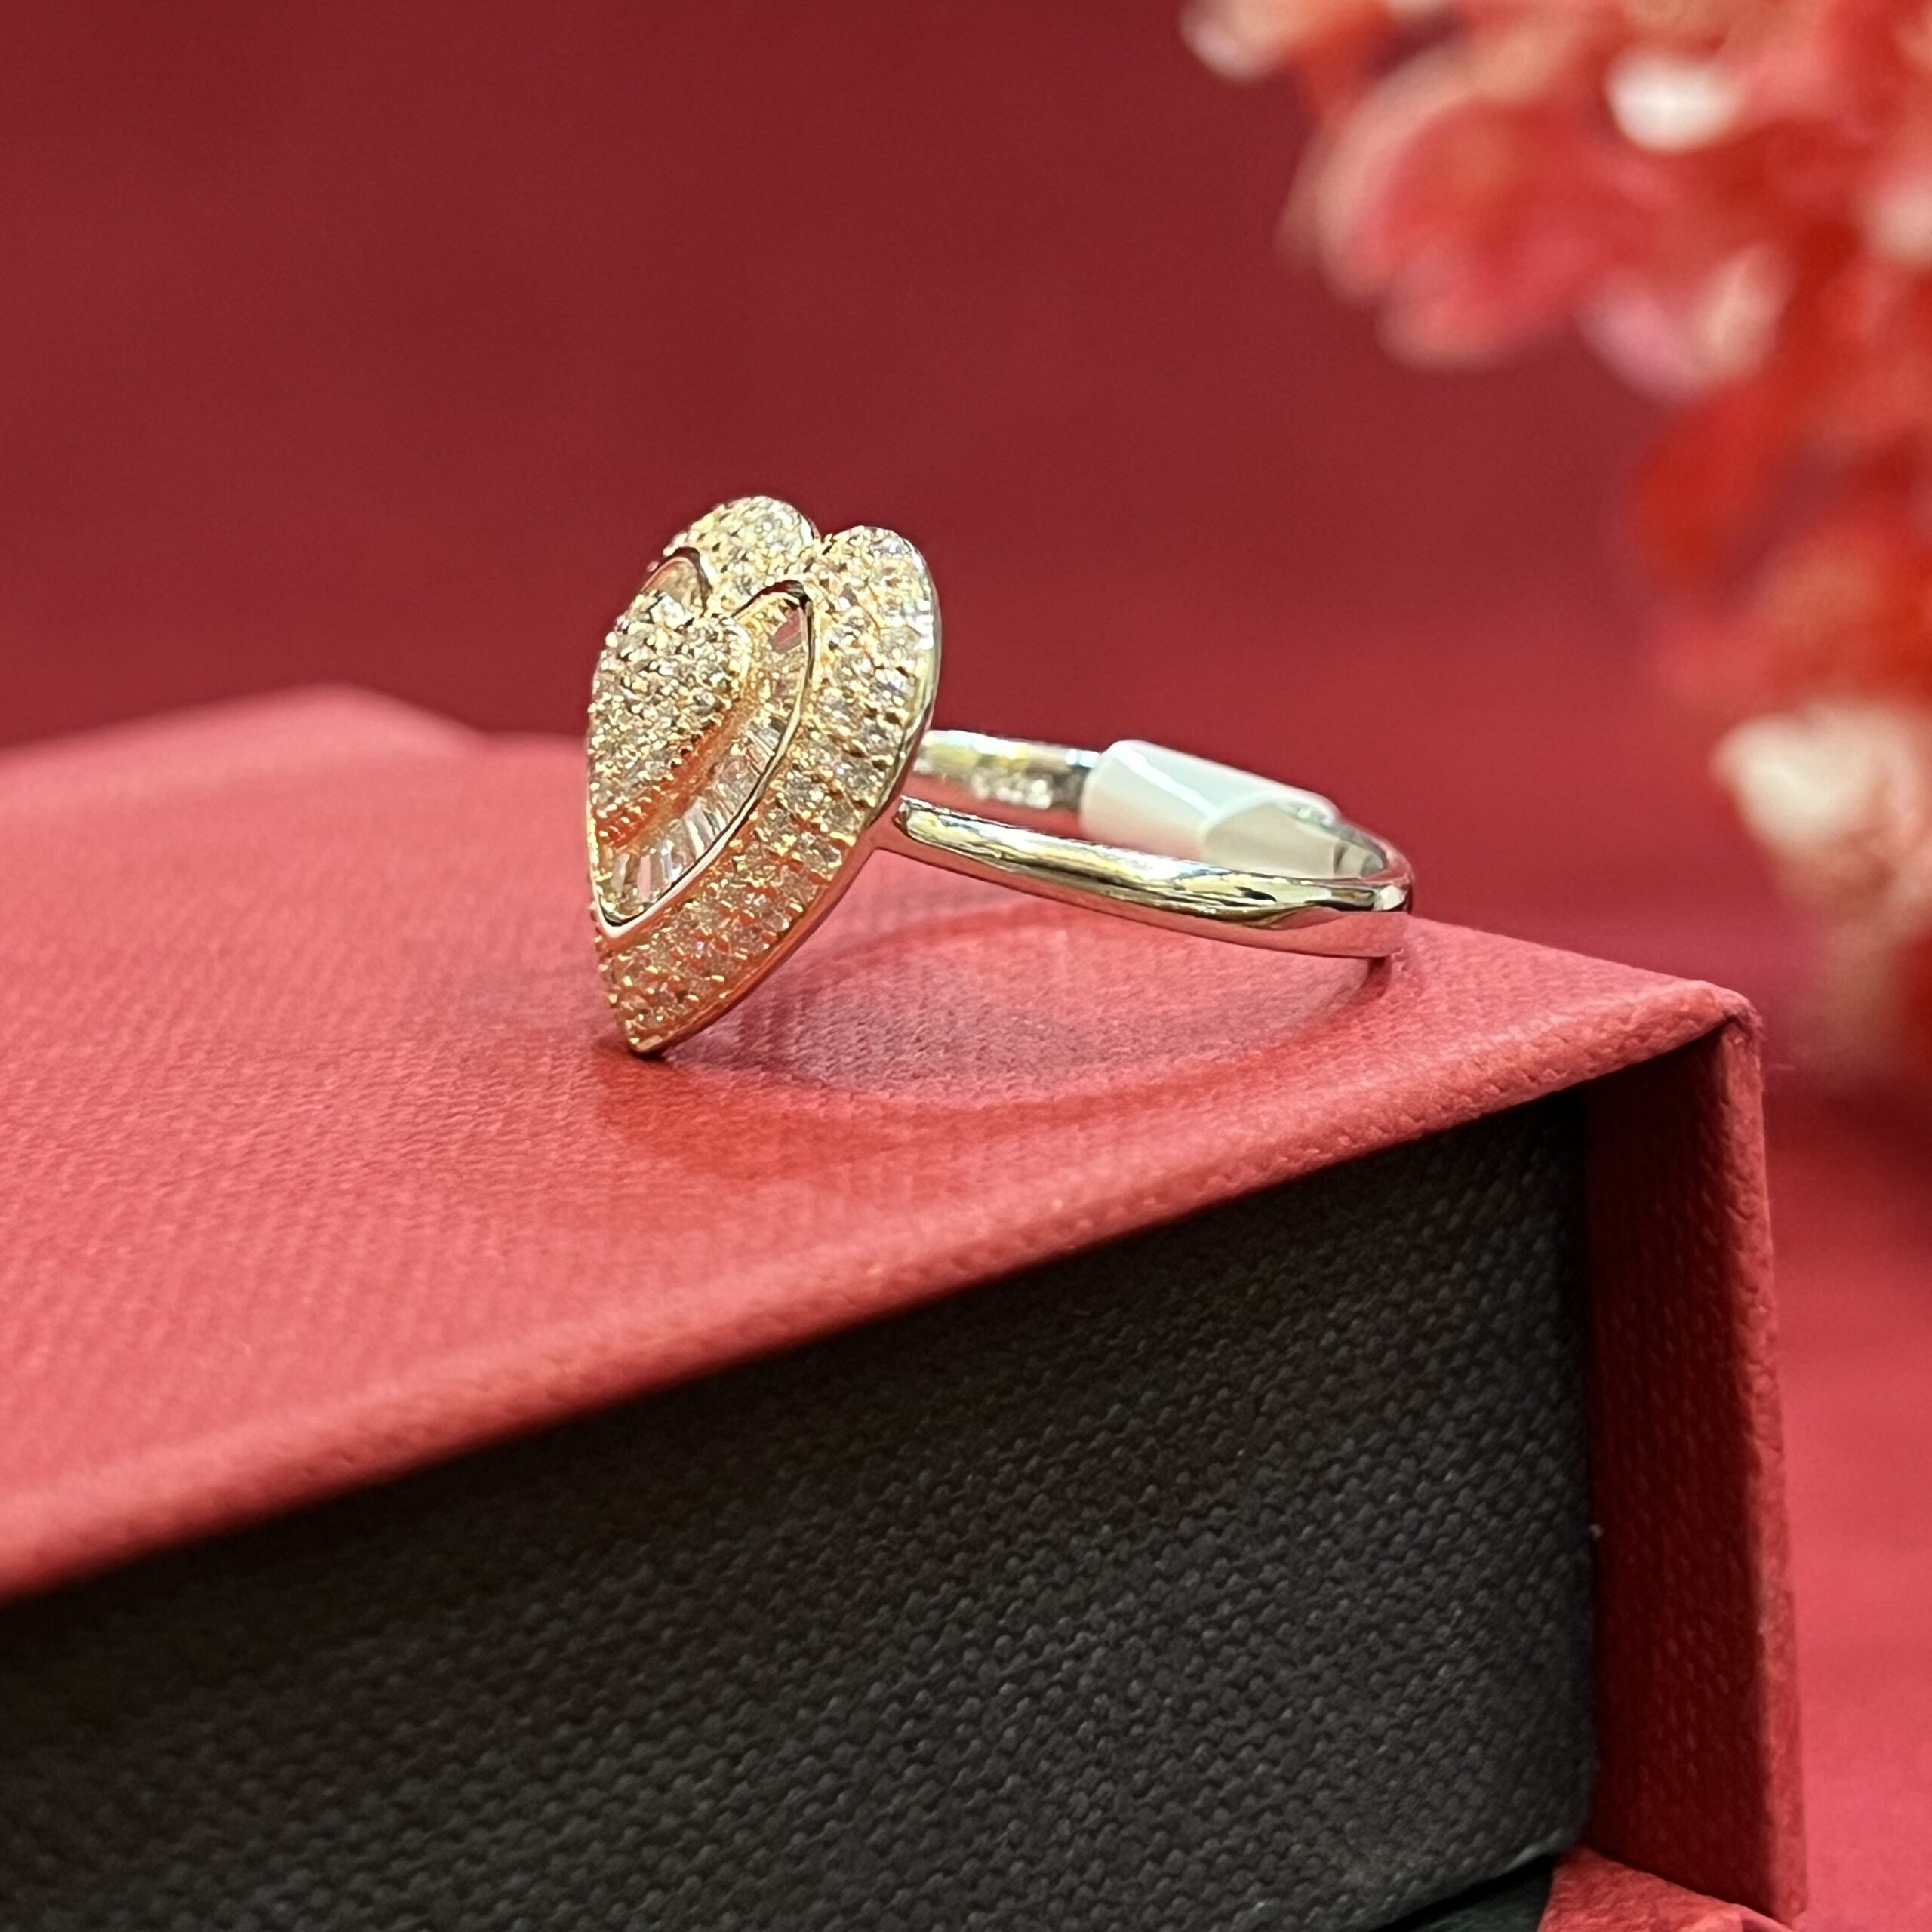 Buy Love Heart Shaped Ring Online in India | Kasturi Diamond